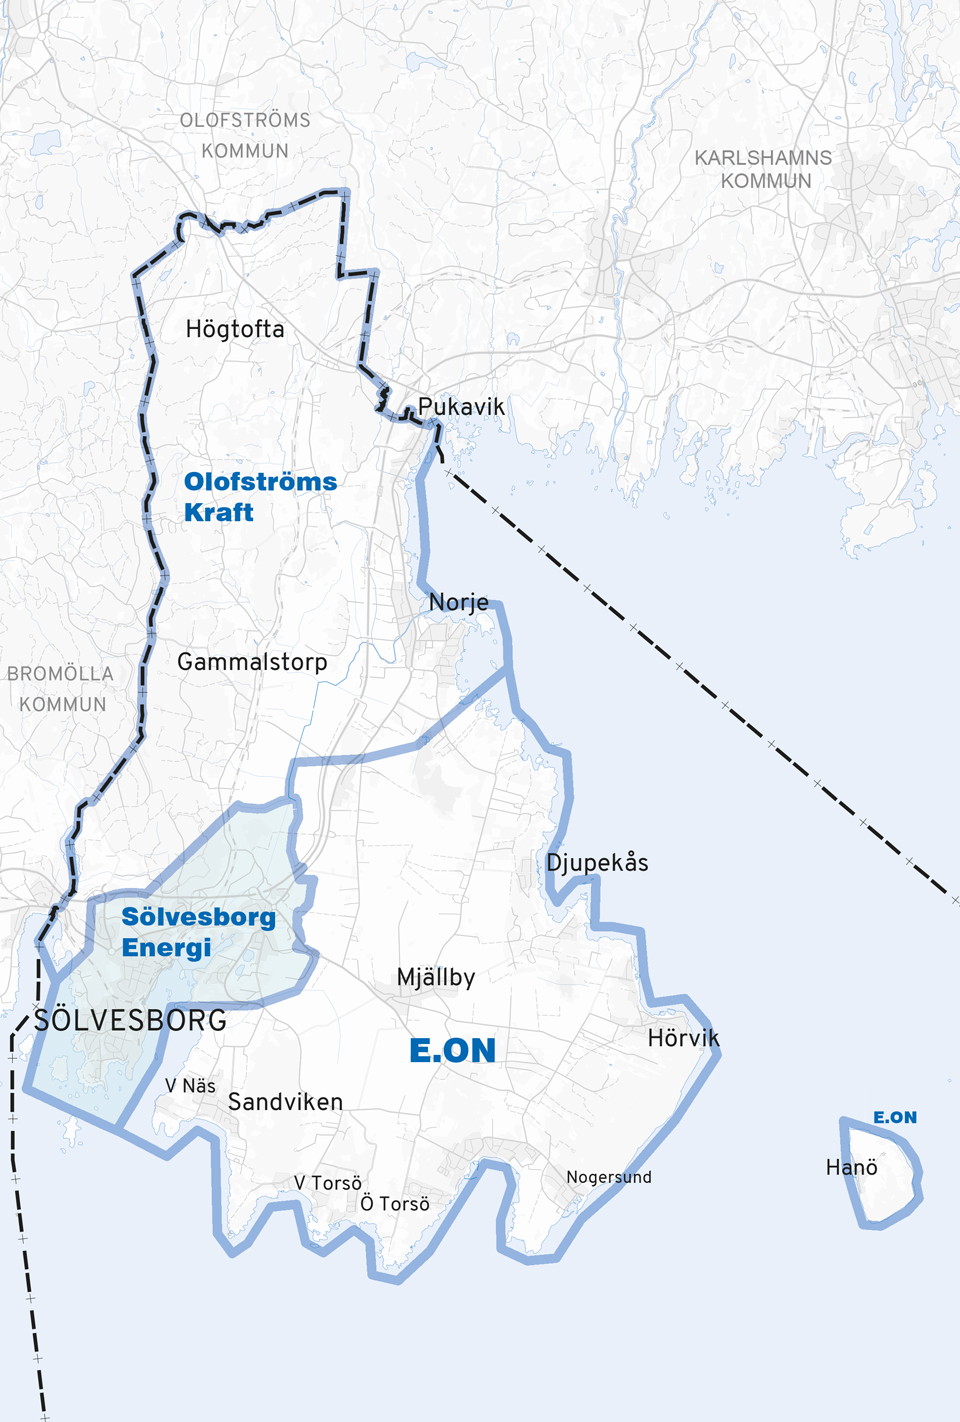 Kartbild över elnätsområden i Sölvesborgs kommun.